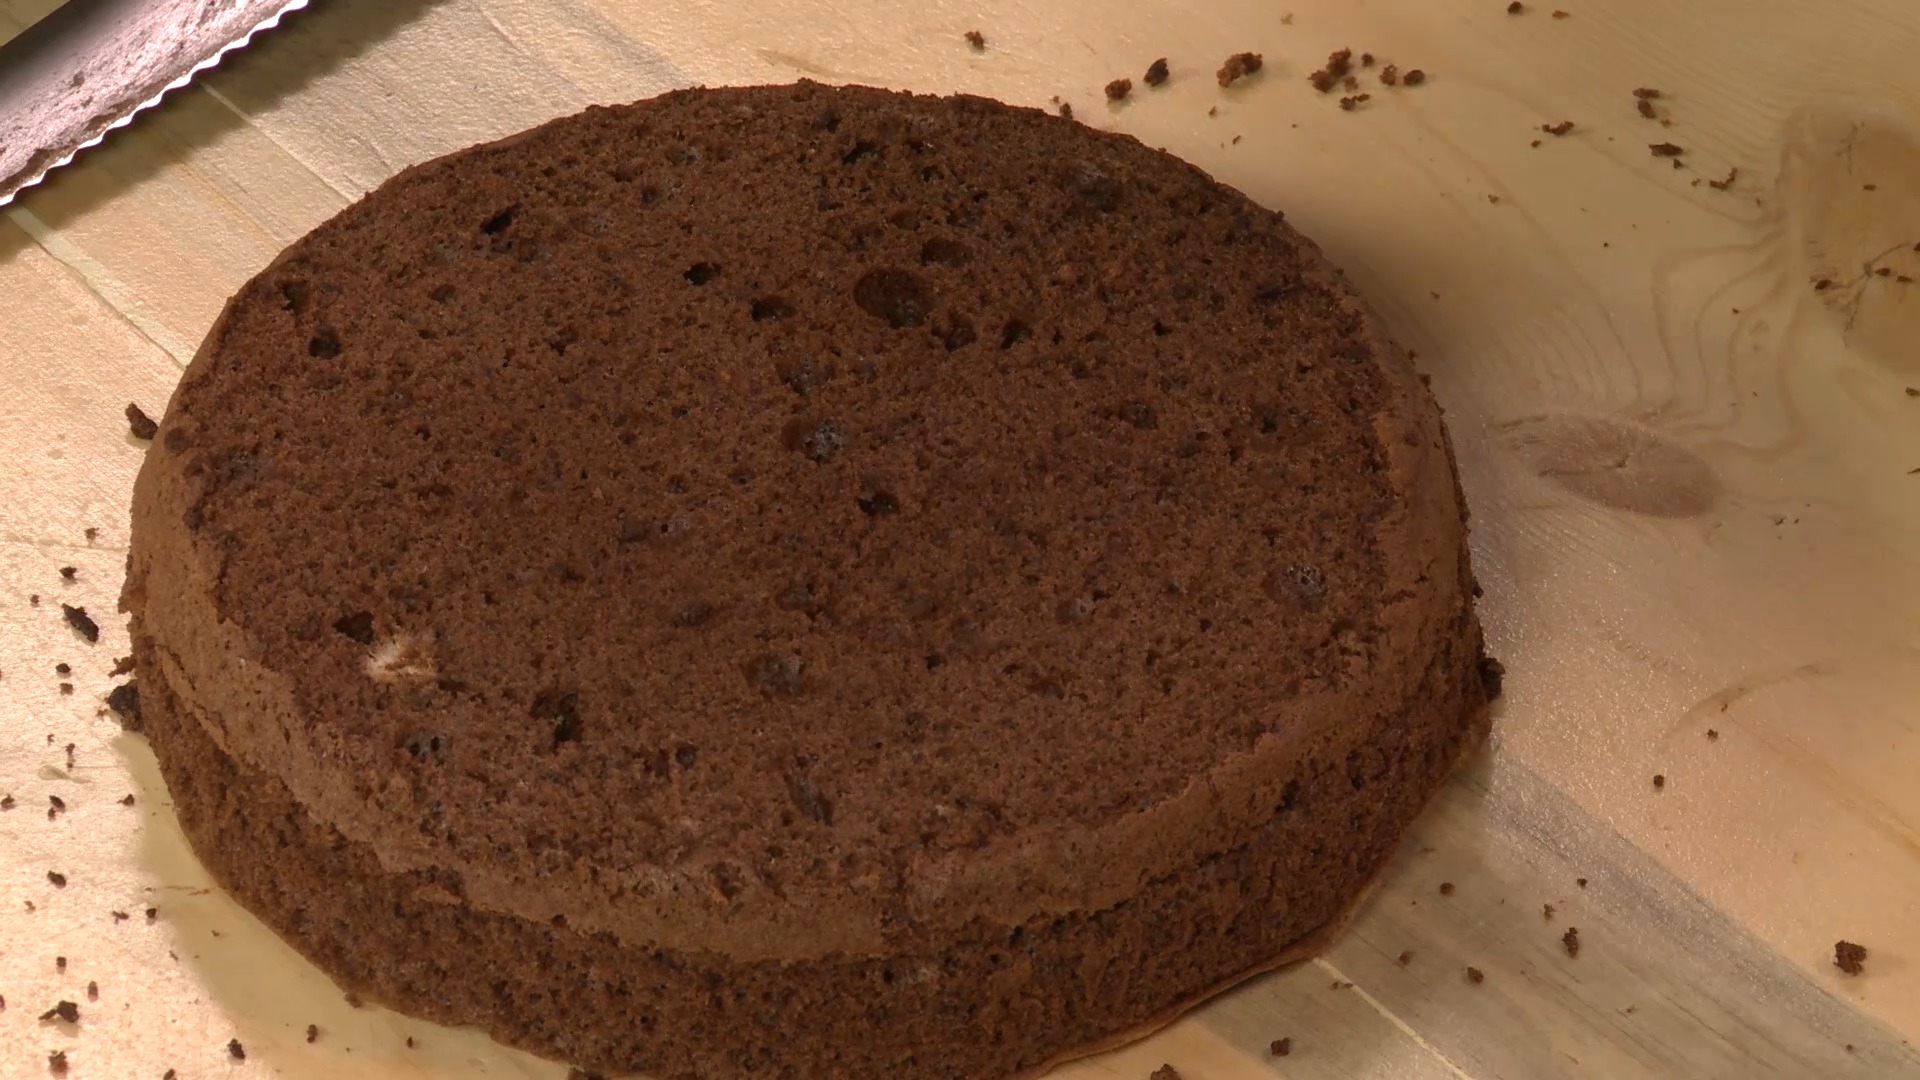 Chocolate Sponge Cake 